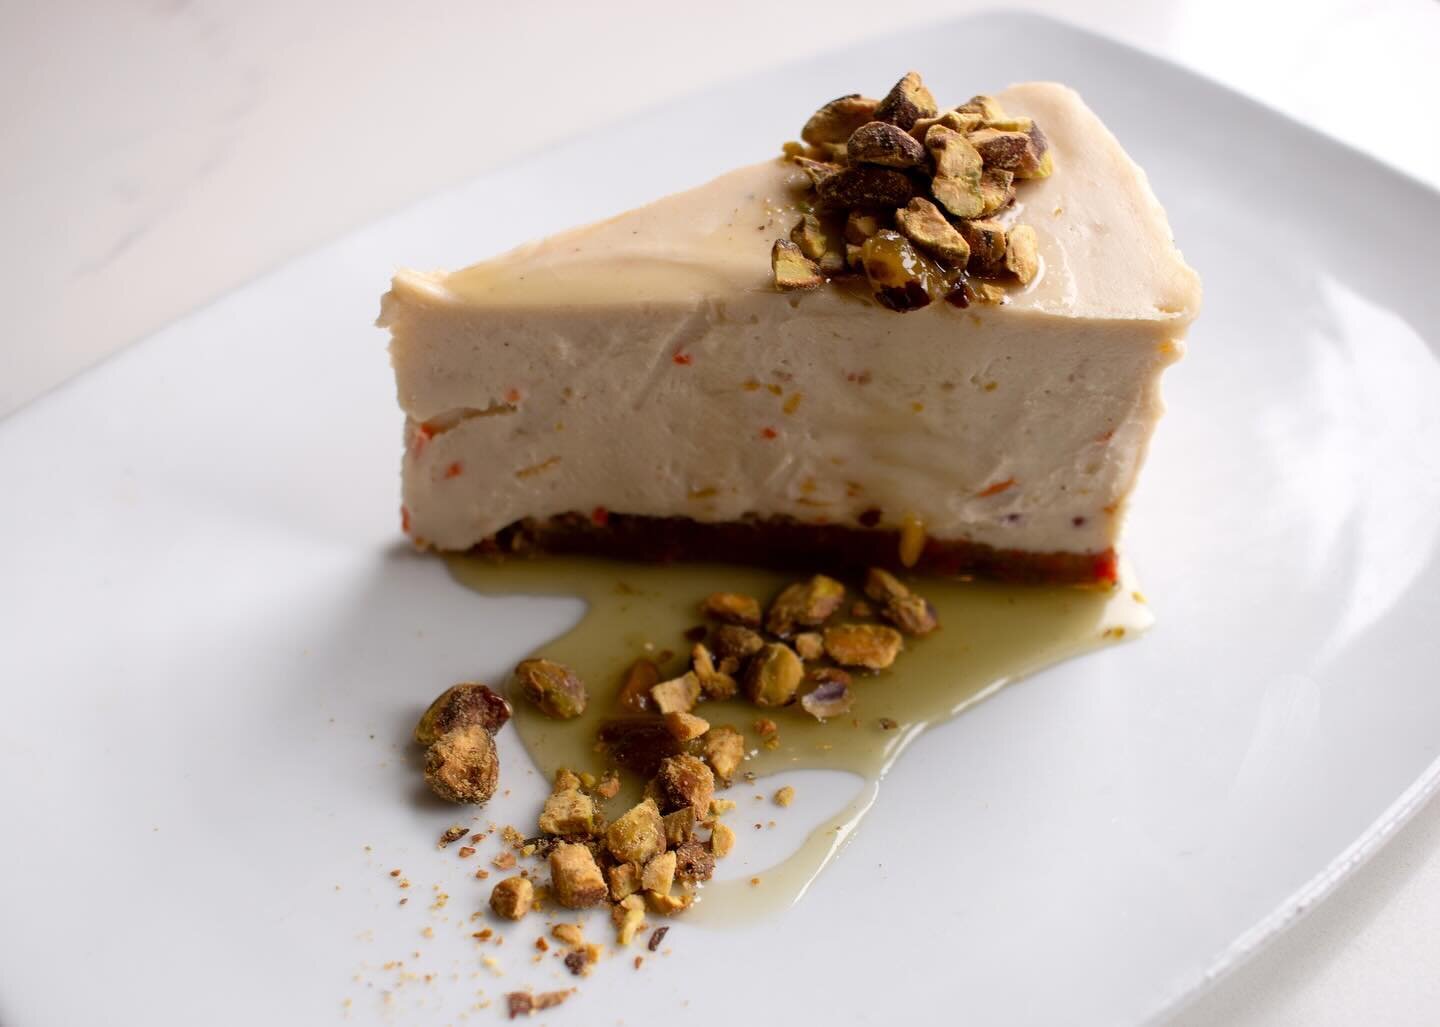 CARROT CONFETTI CHEESECAKE 🥕✨🥕✨🥕 with pistachio orgeat 🖤
(gluten free!)

#vegancheesecake #cheesecakelove #pnwvegan #spokaneeats